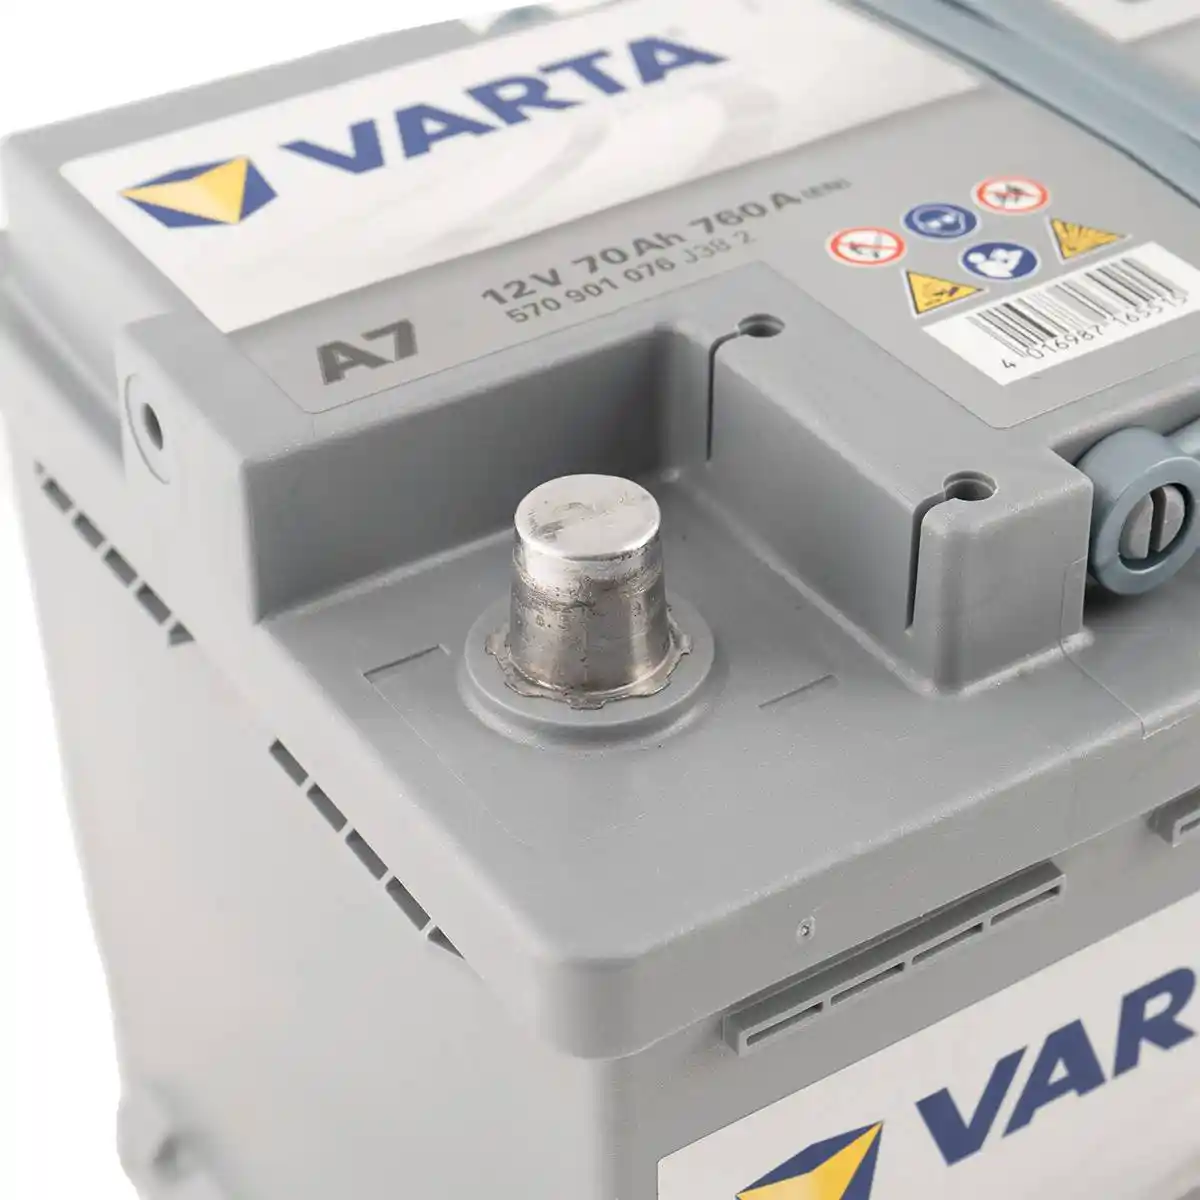 VARTA A7 Silver Dynamic AGM 12V 70Ah 760A Batteria auto Start-Stop 570 901  076